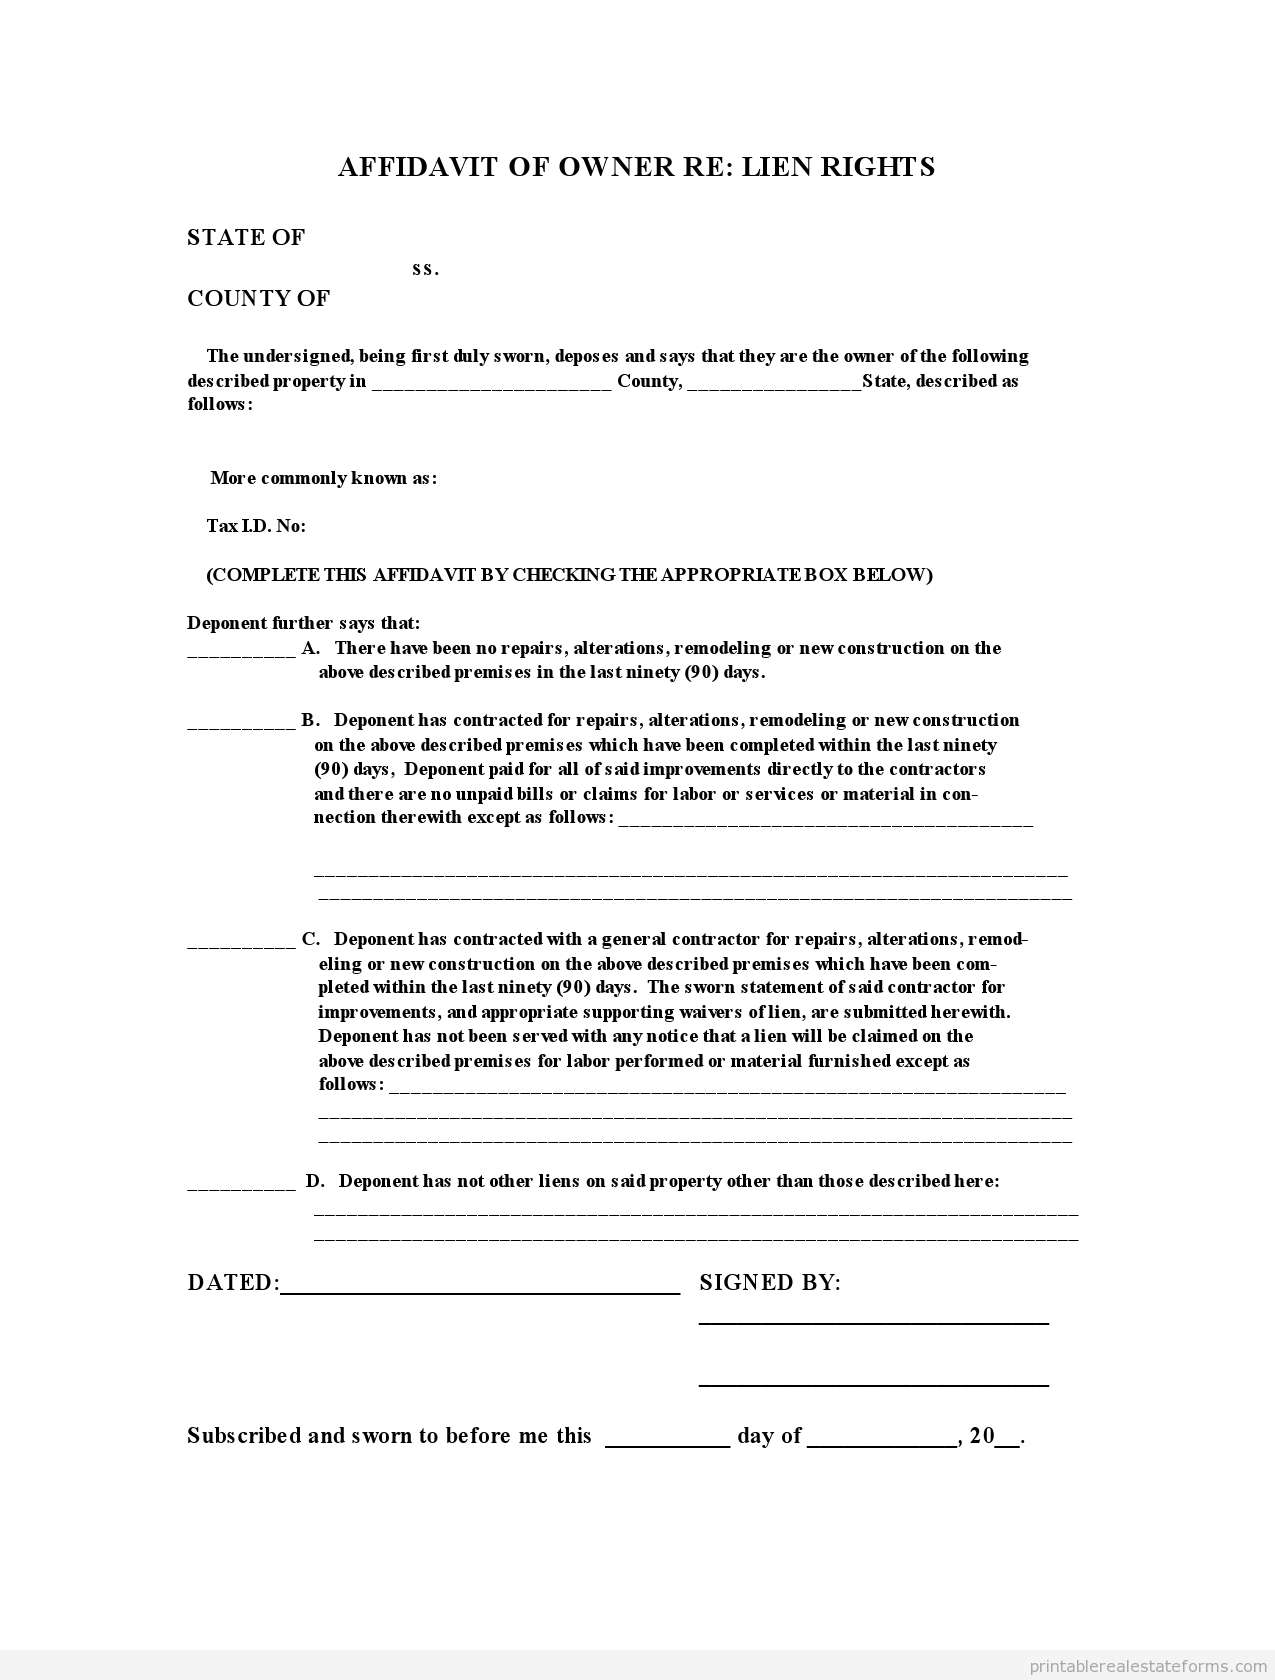 Sample Printable Affidavit Of Ownership 5 Form | Printable Real - Free Printable Blank Affidavit Form